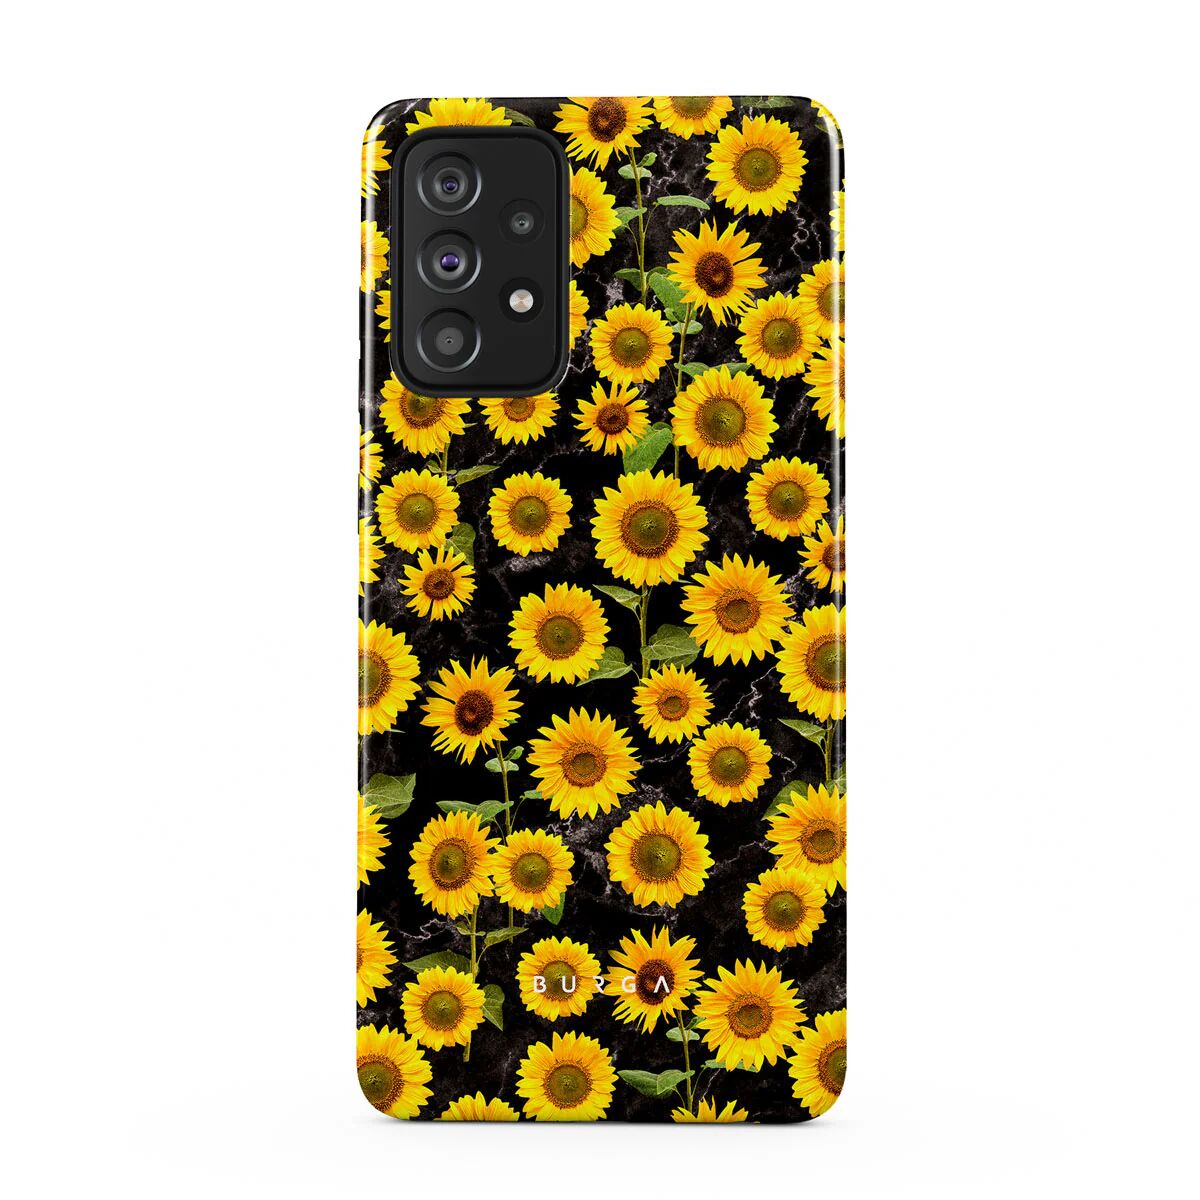 BURGA Sunflower Glimmer - Samsung Galaxy A72 4G Case